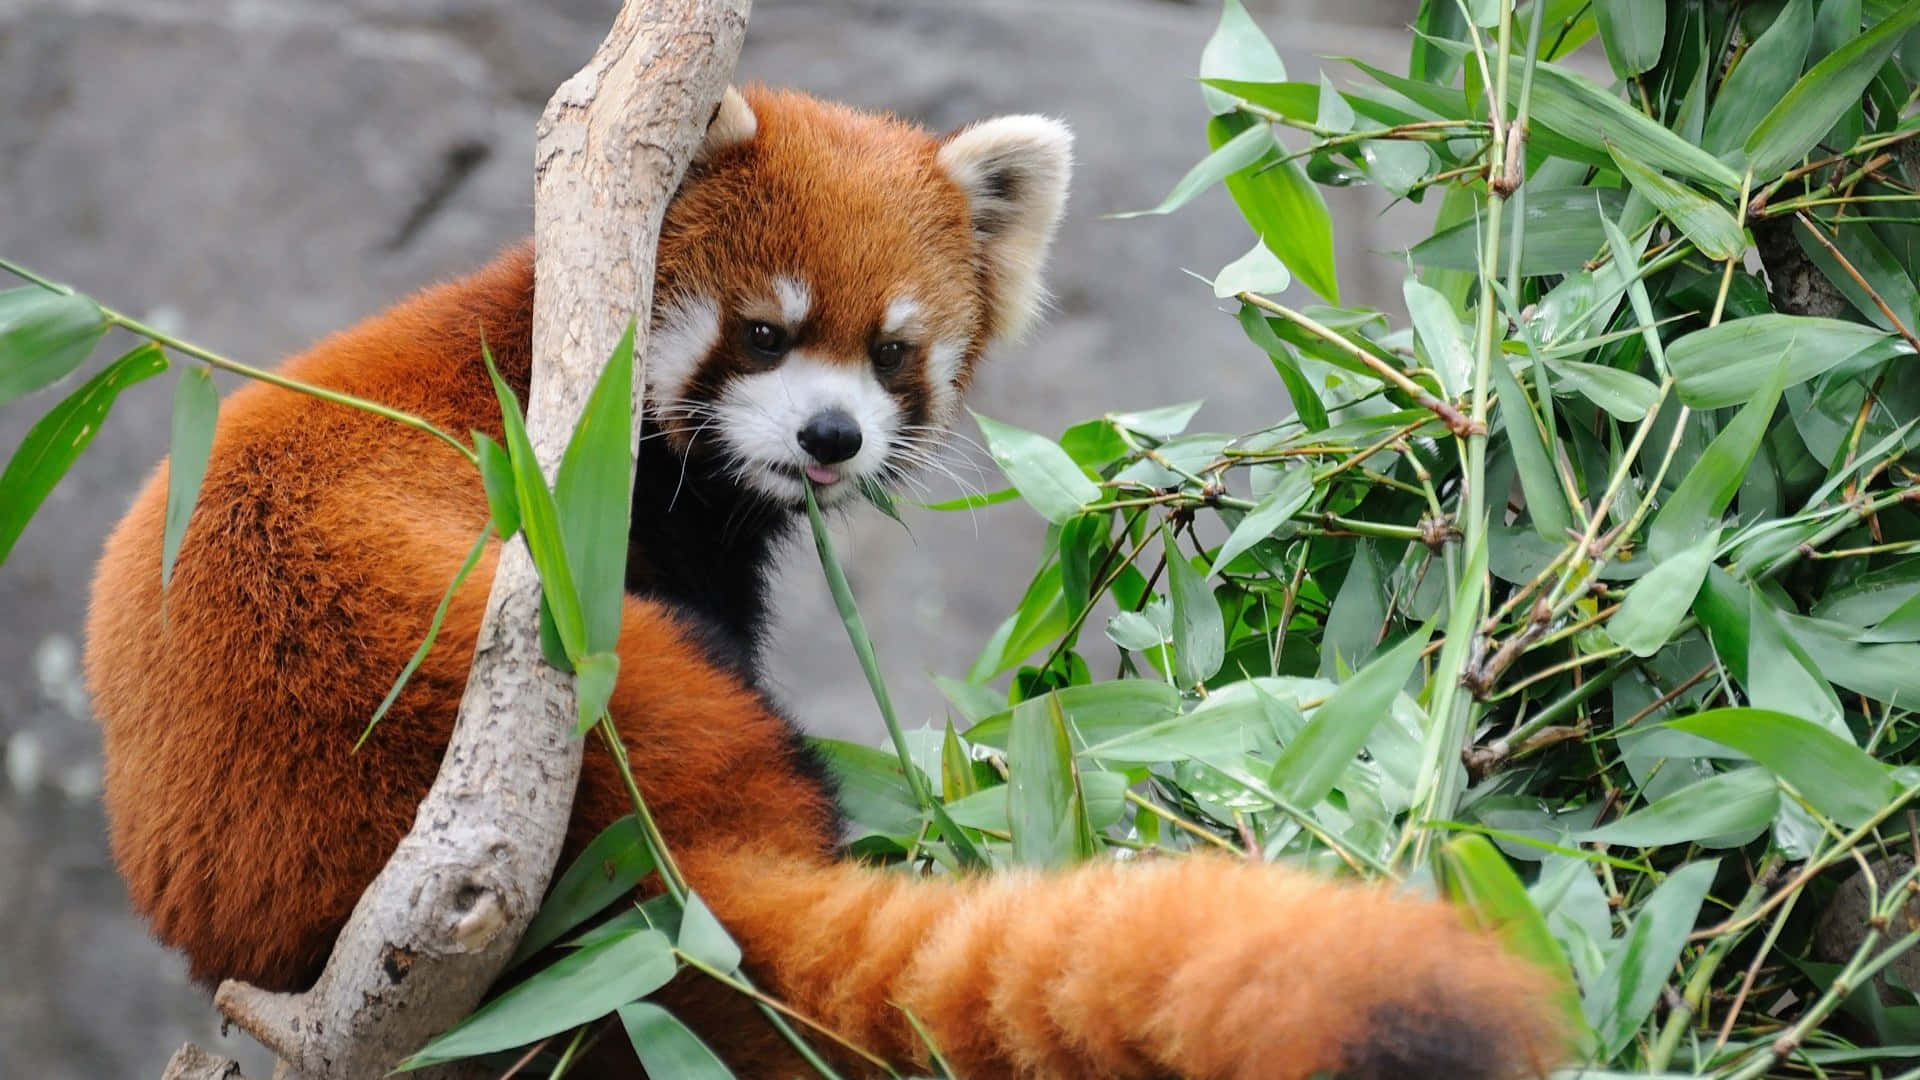 Adorable Red Panda Peeking From its Habitation